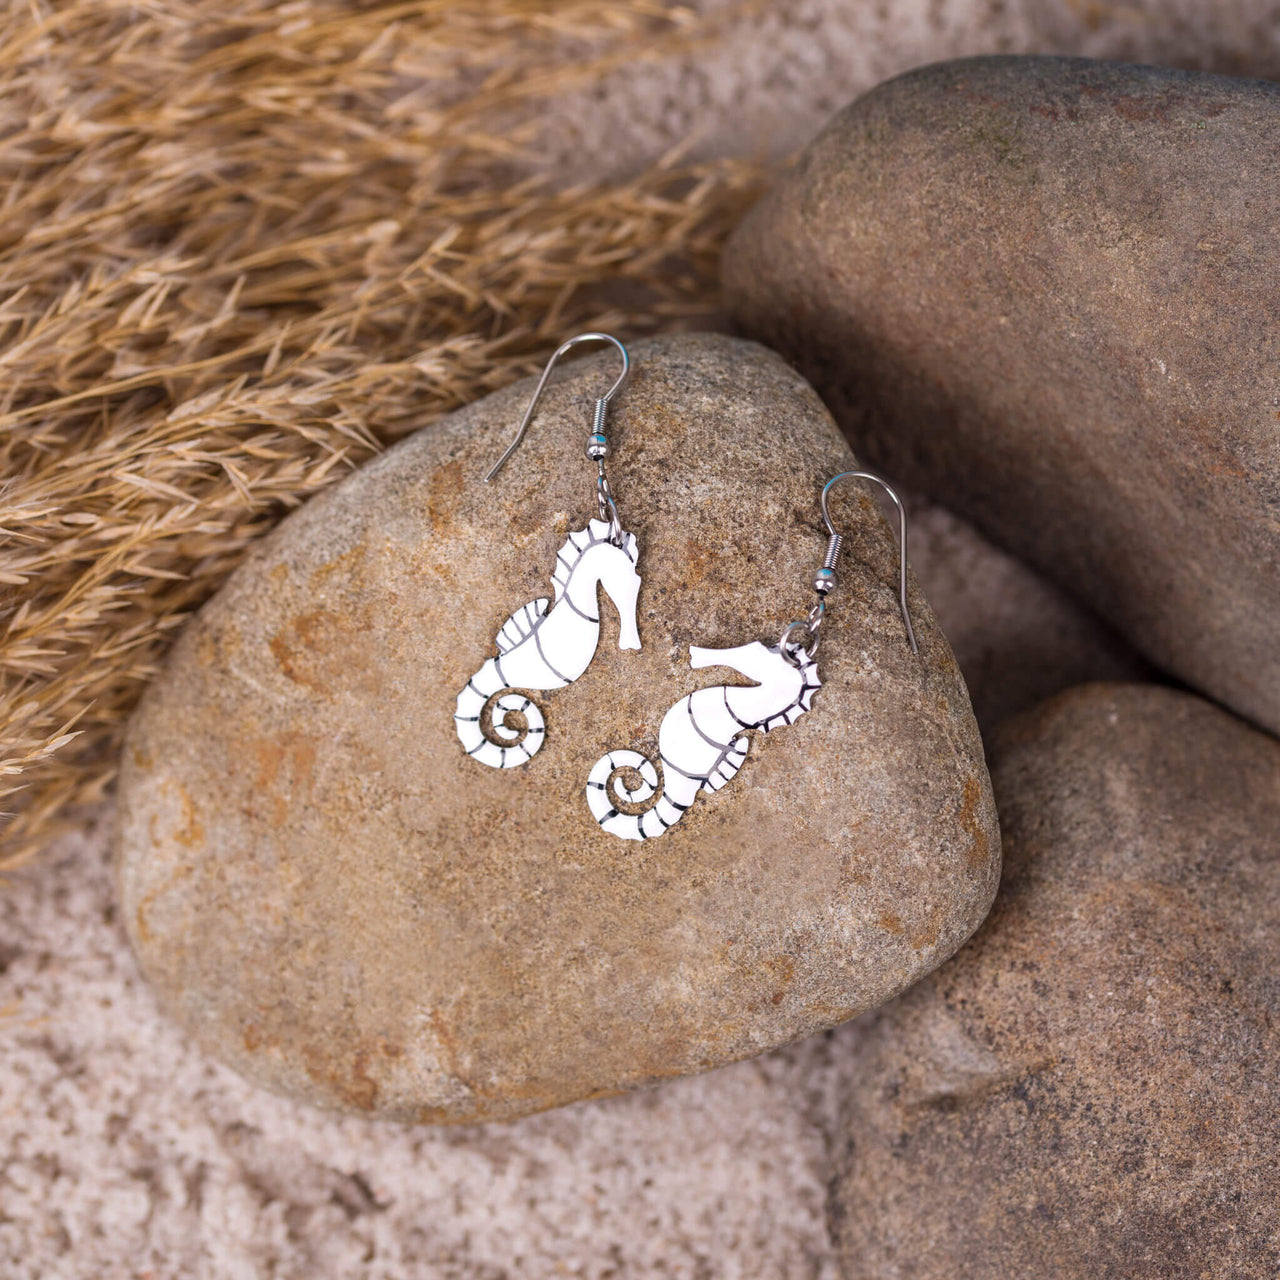 White seahorse earrings - enamel on stainless steel